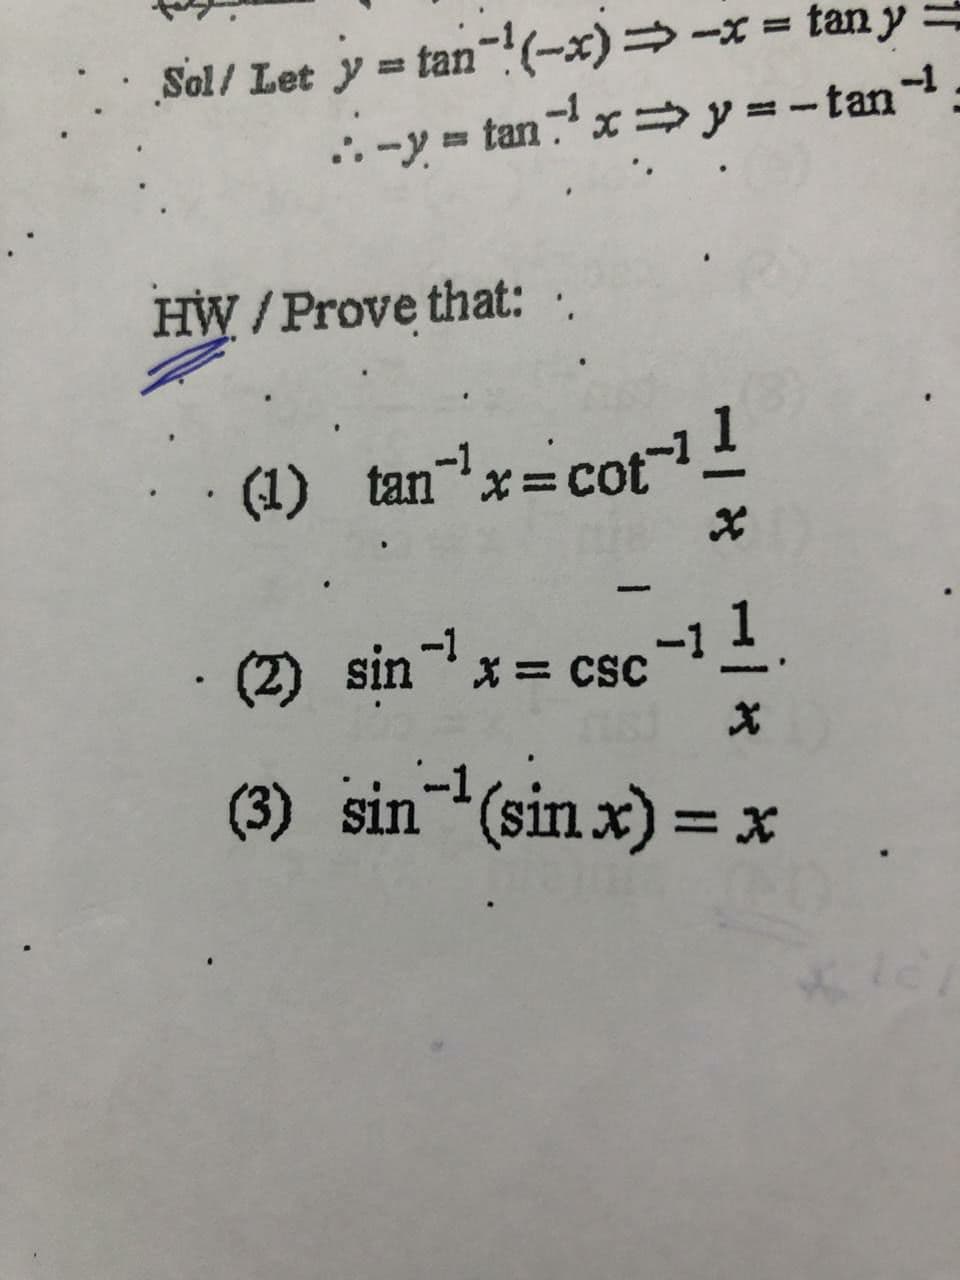 Sol/ Let y = tan"?(x)=-x = tan y =
:-y = tanx y = -tan-1
HW/Prove that:
(1) tan-x=cot
(2) sin-x = csc-11.
X= CSC
(3) sin (sin x)3Dx
